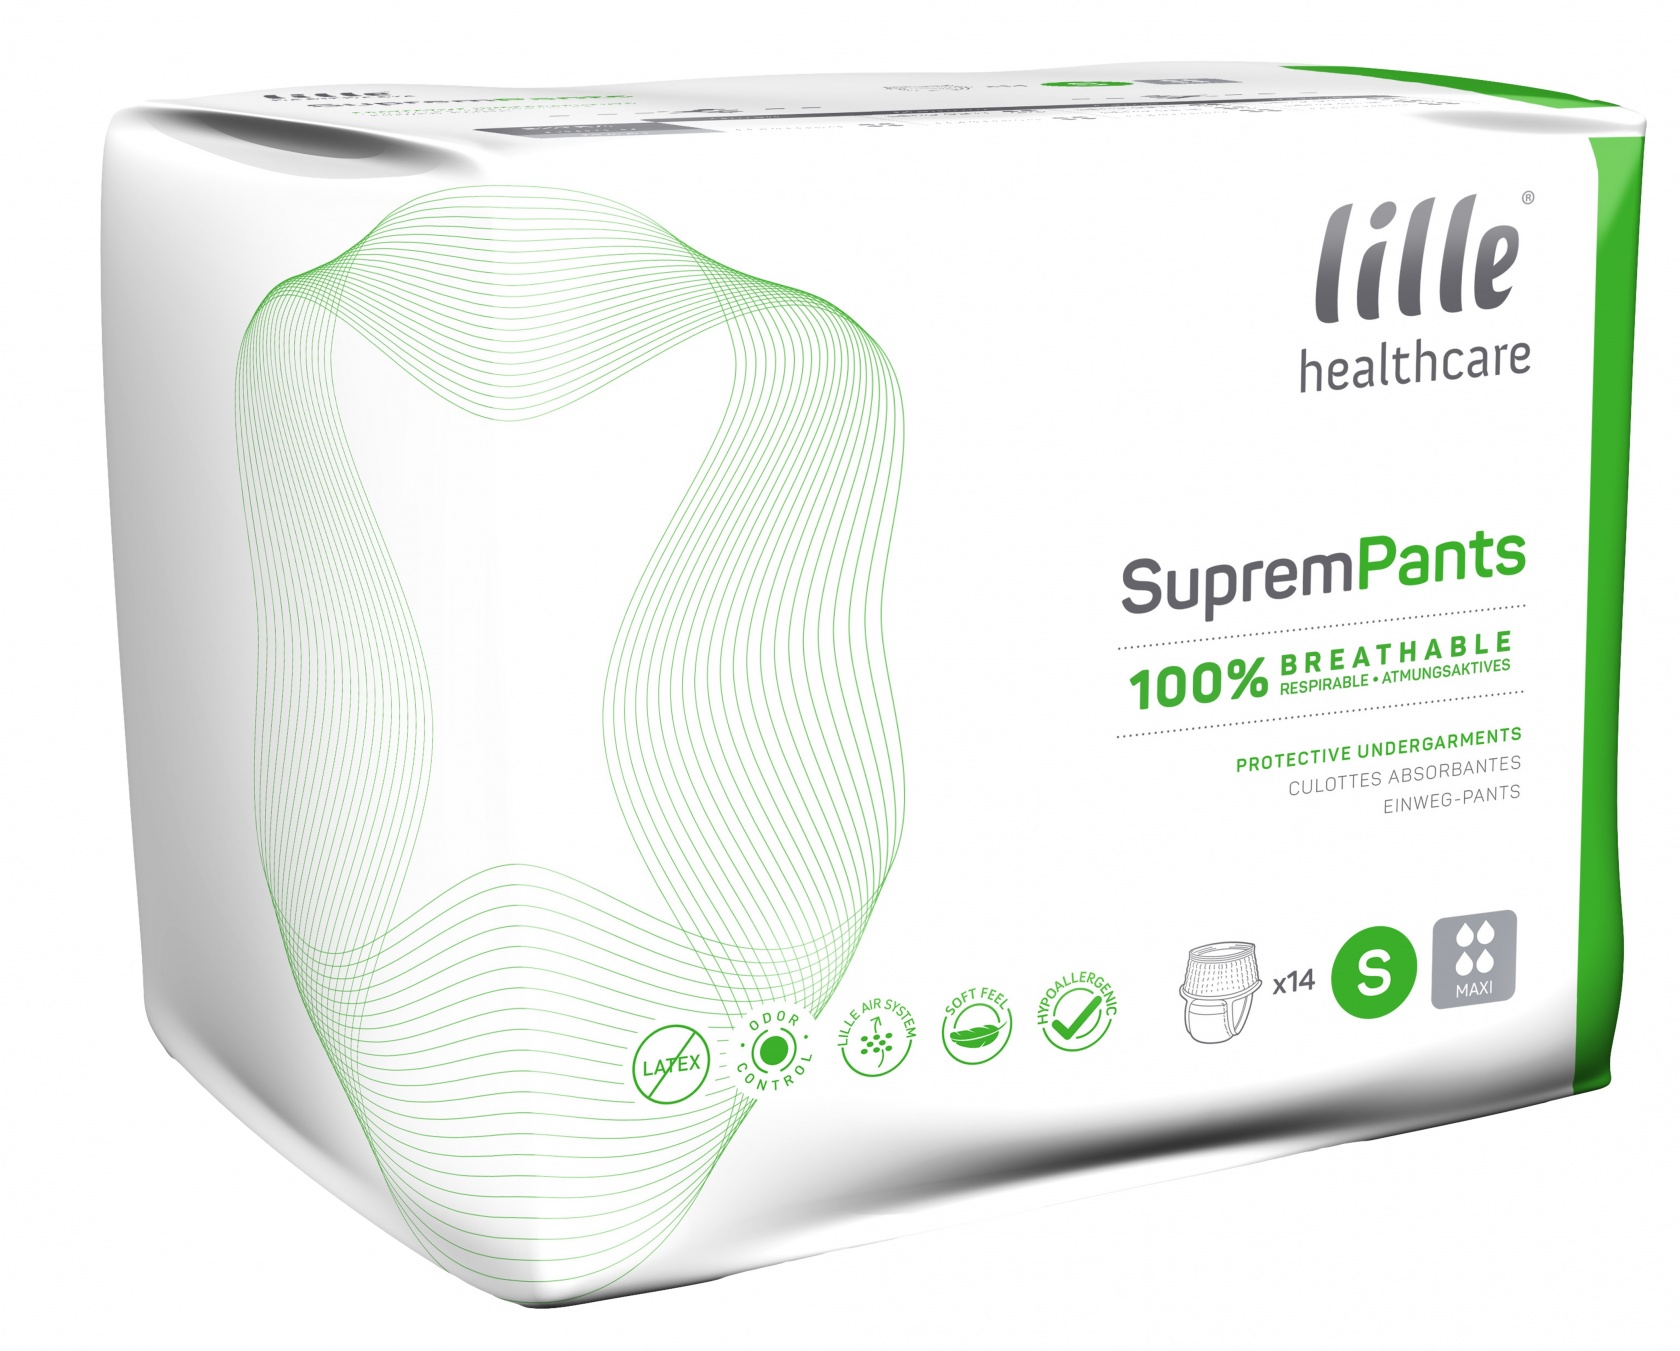 Lille Suprem Protective Underwear Maxi Small 1900mls image 0